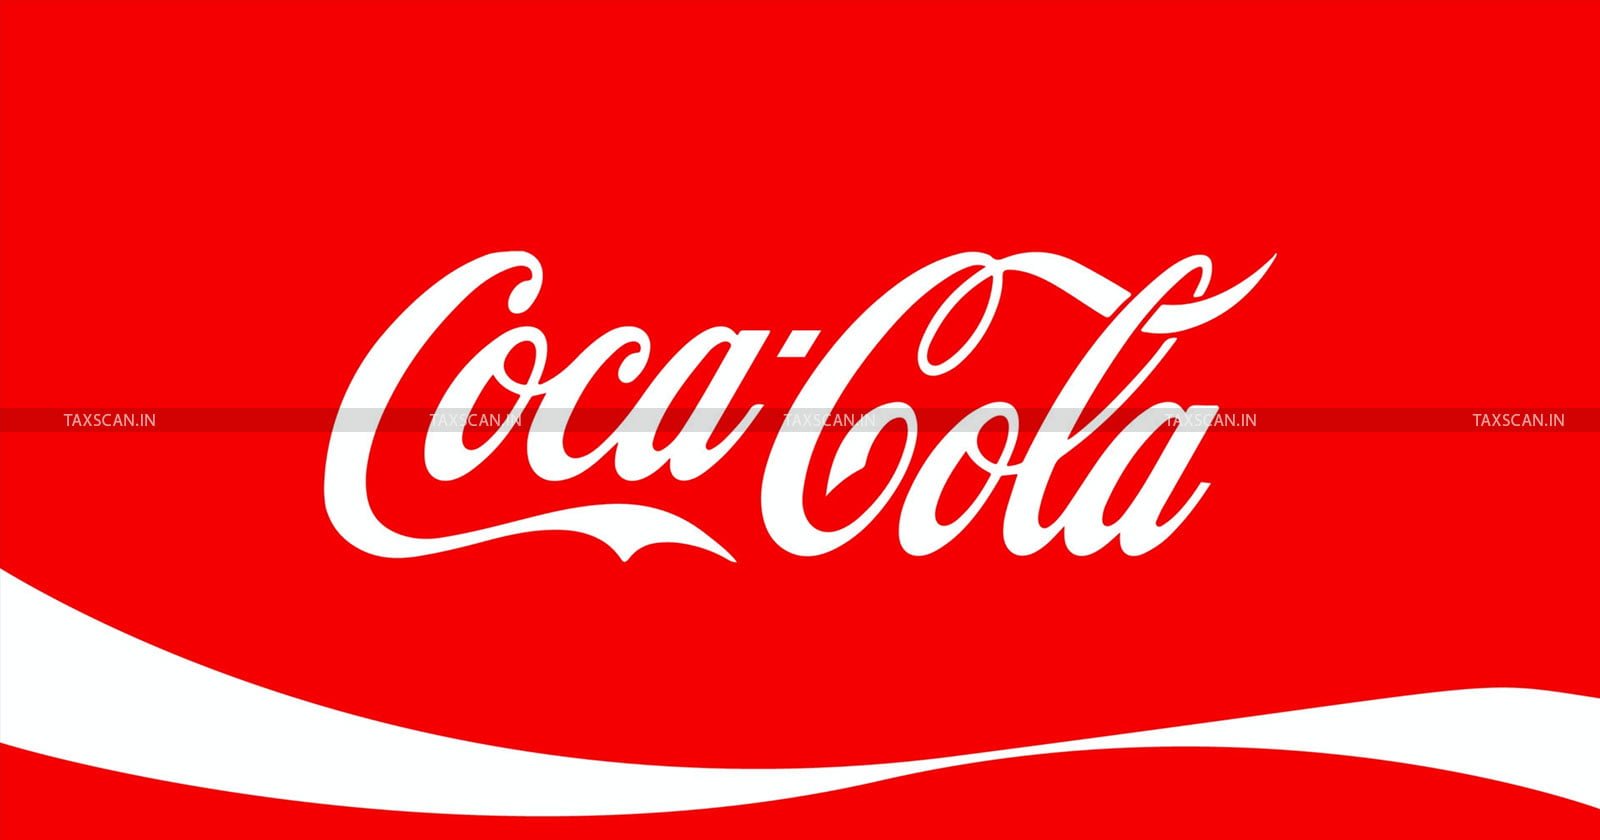 Excise tax credit transfer - Britco - Coca Cola - Corporate merger taxation - taxscan